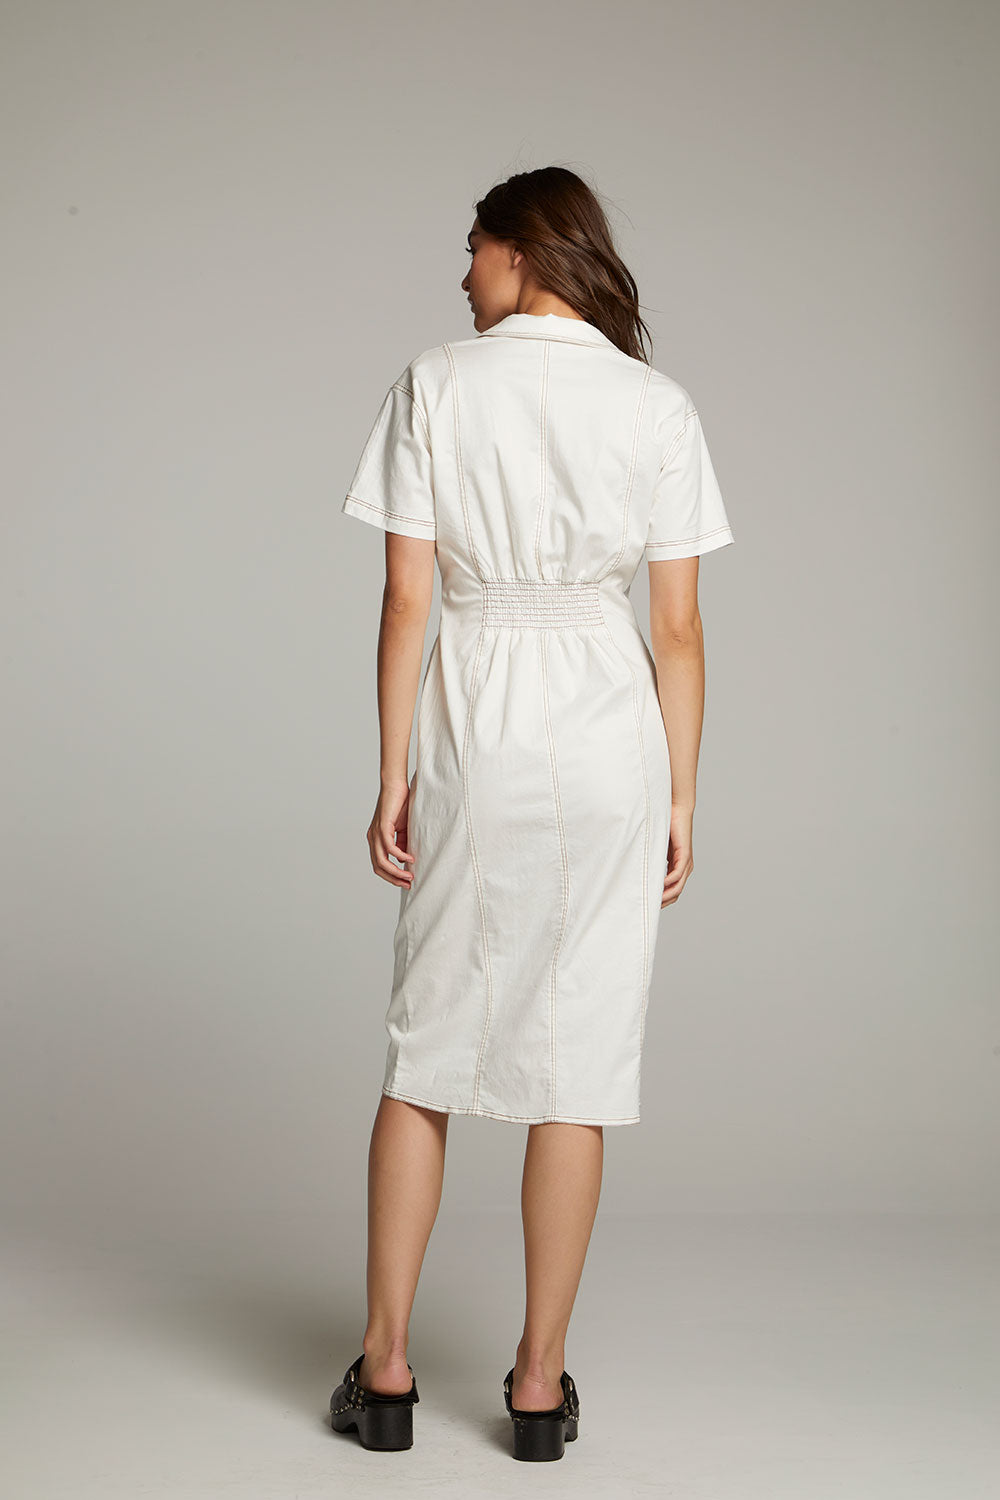 Rachelle White Dress WOMENS chaserbrand